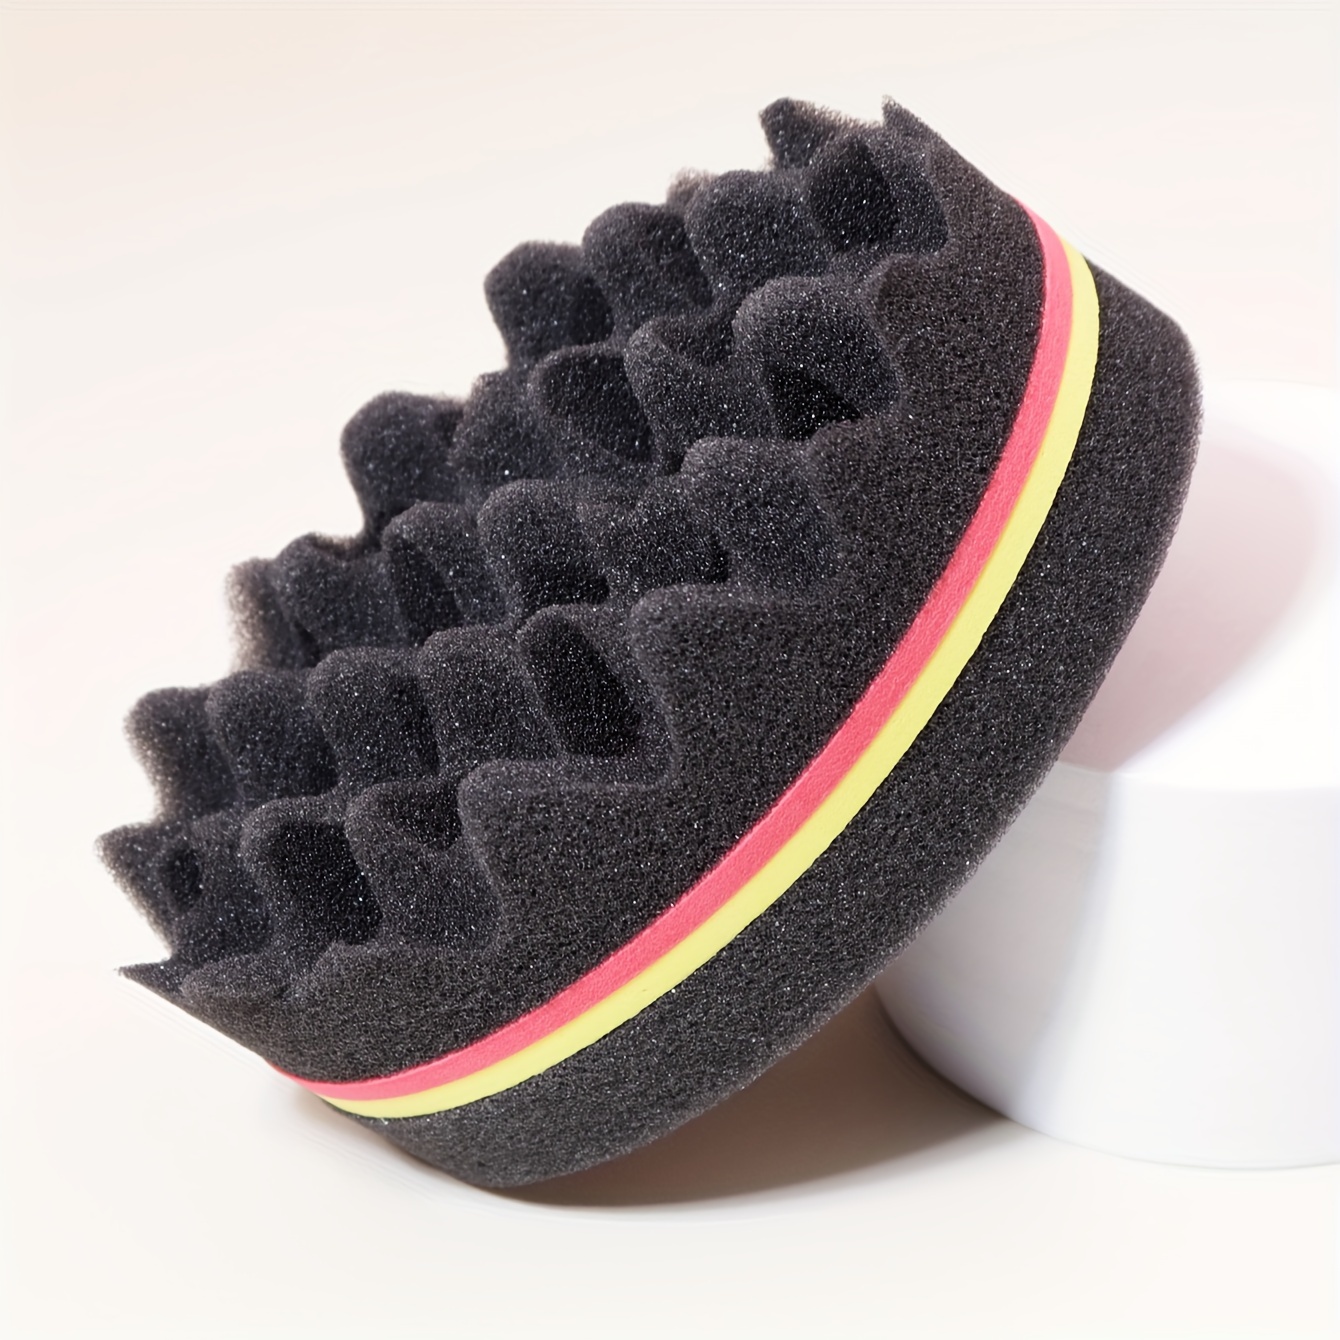 New Oval Double-Side Magic twist hair brush sponge,Sponge Brush for  Natural,afro coil wave dread sponge brushes - AliExpress